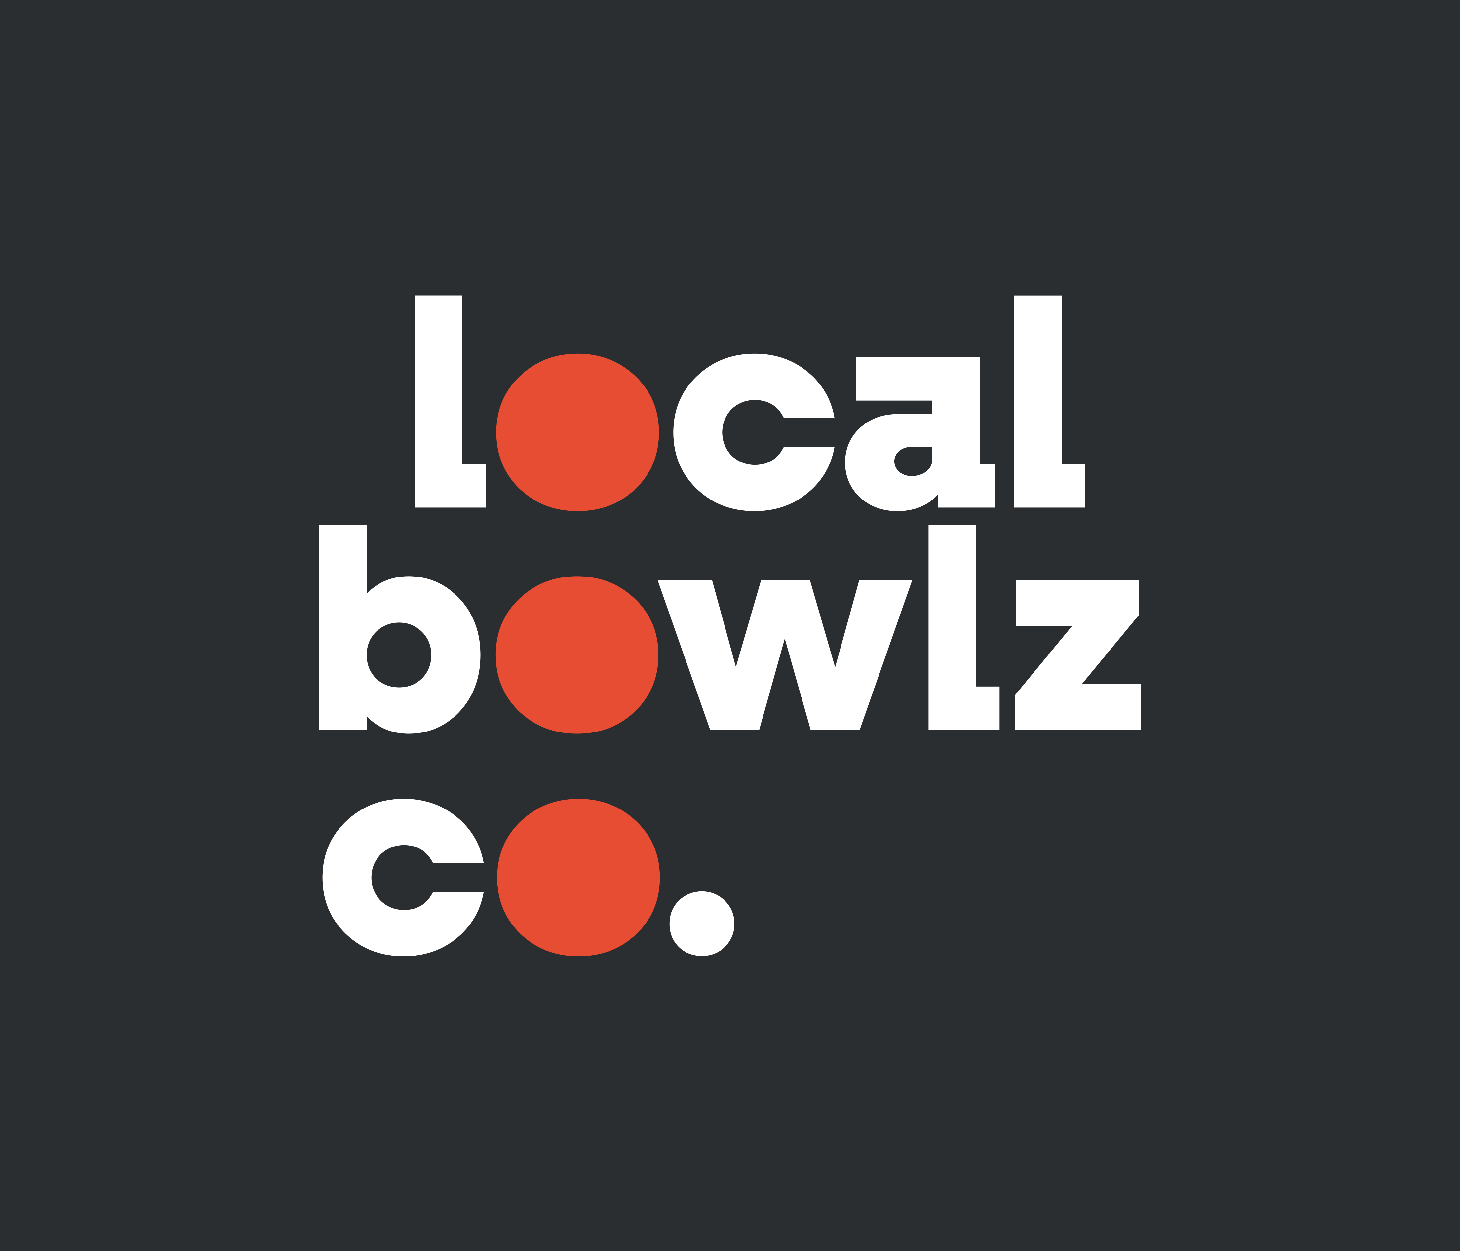 Local Bowlz Co.